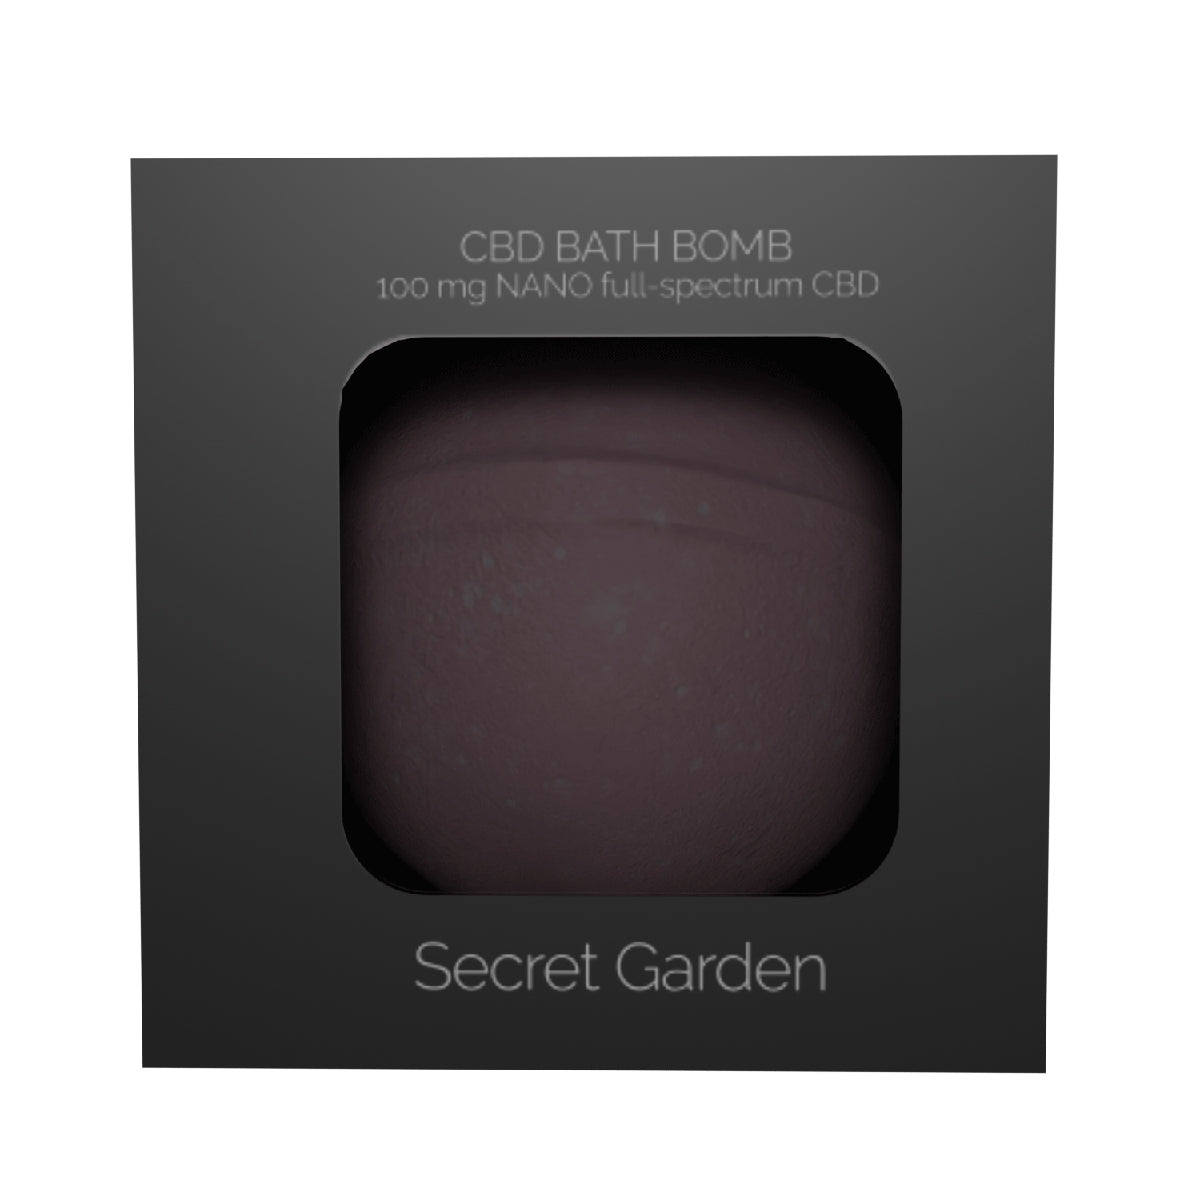 NEO Sensual CBD Bath Bomb - Secret Garden